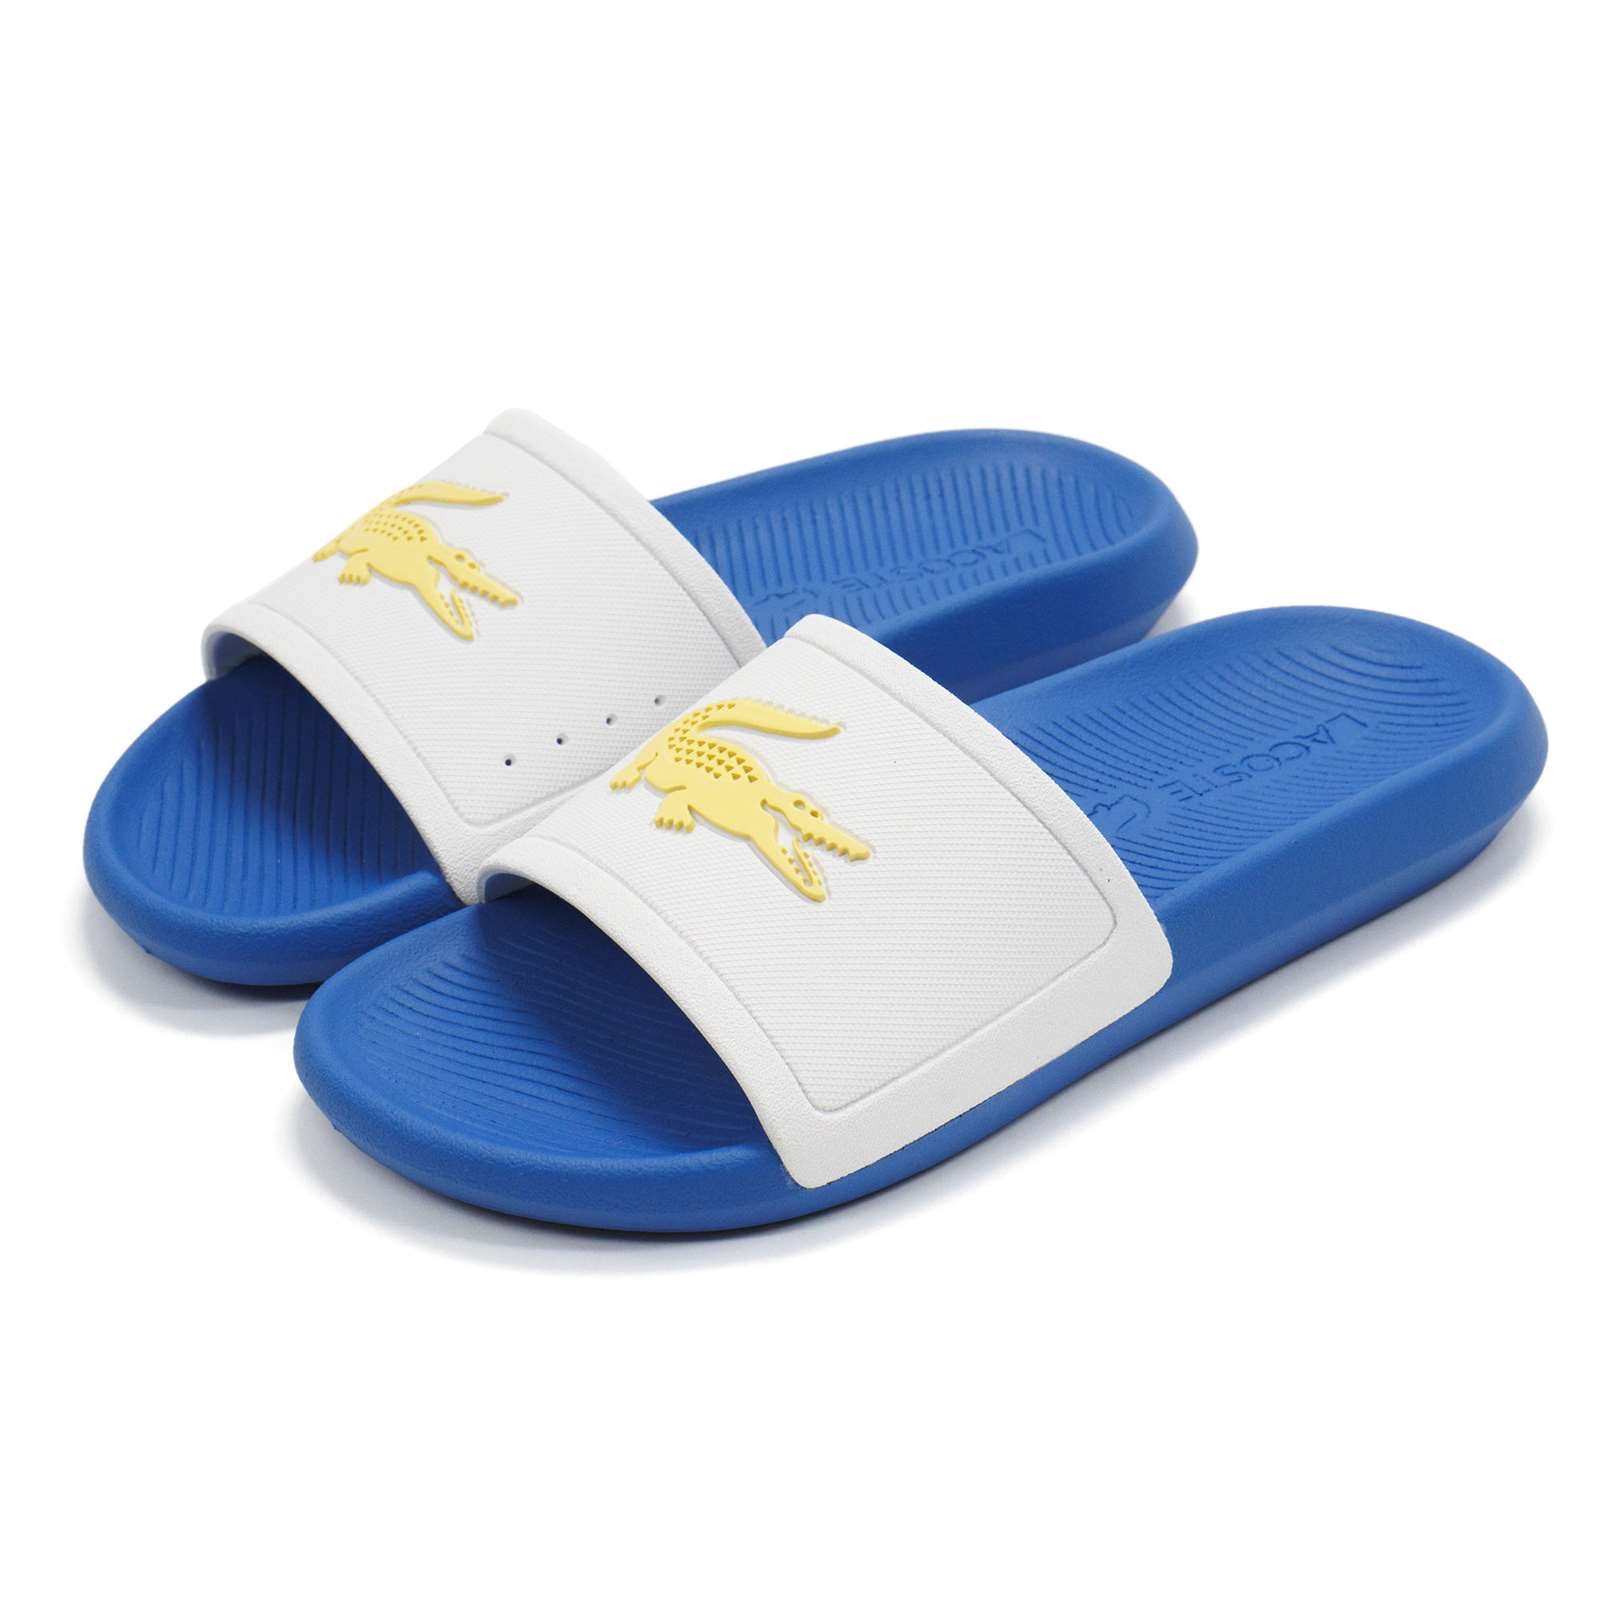 Lacoste Men Croco Slide Sandals